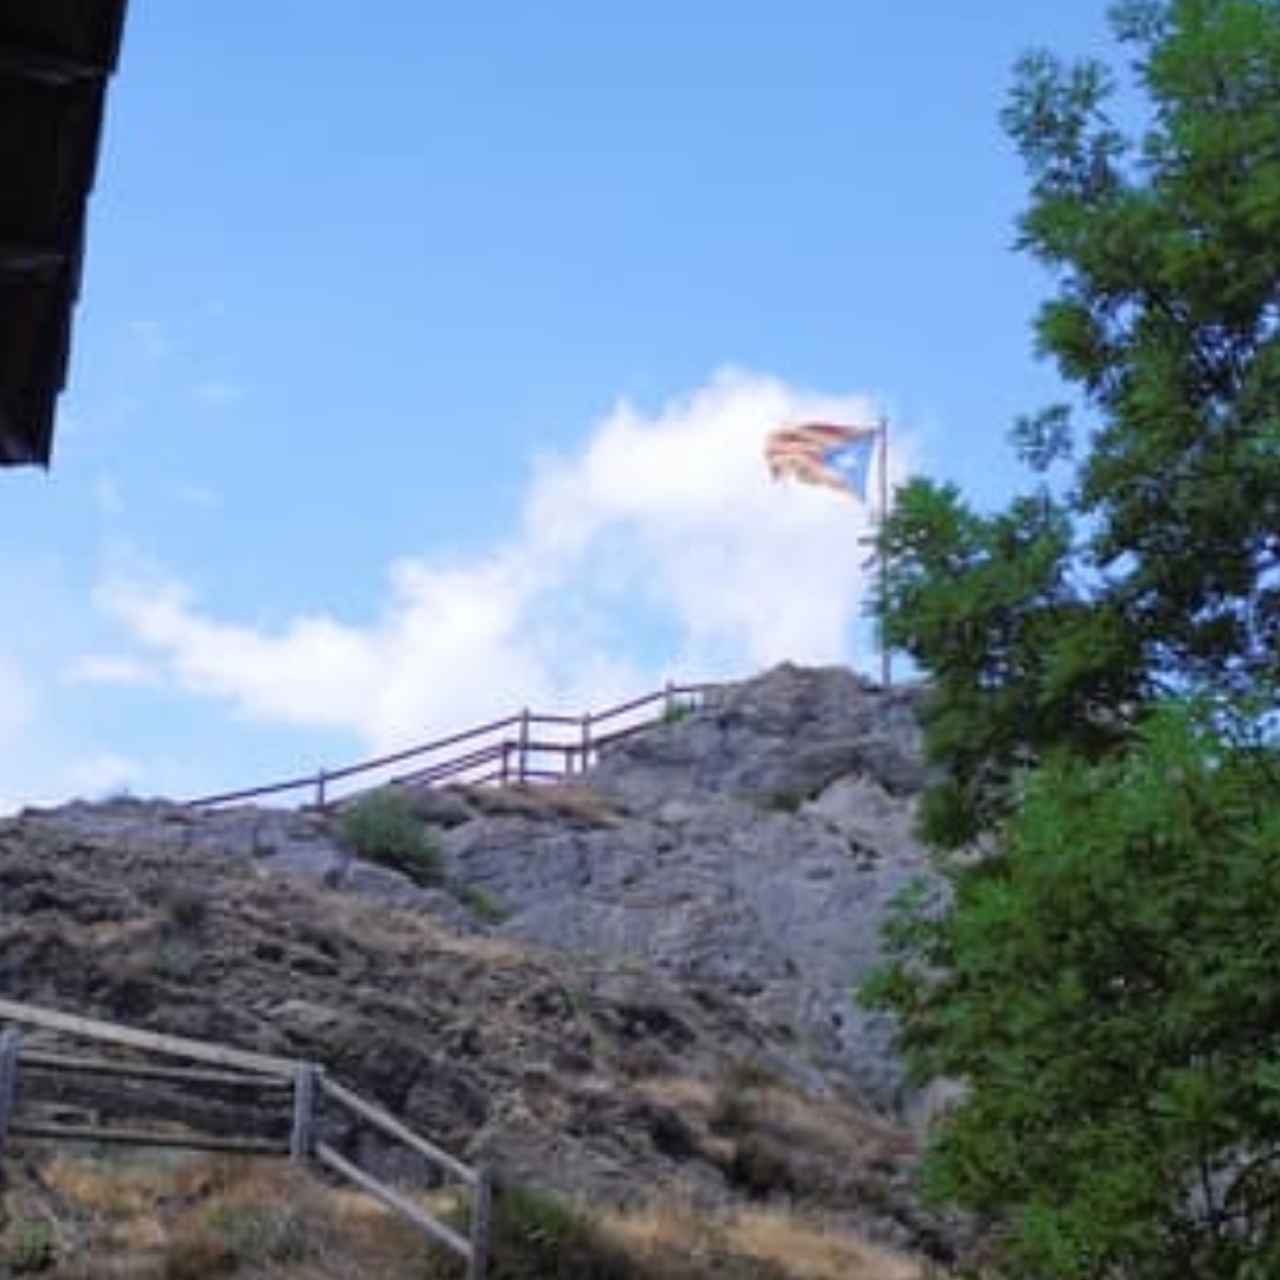 Bandera independentista situada en el parque natural Cadí-Moixeró